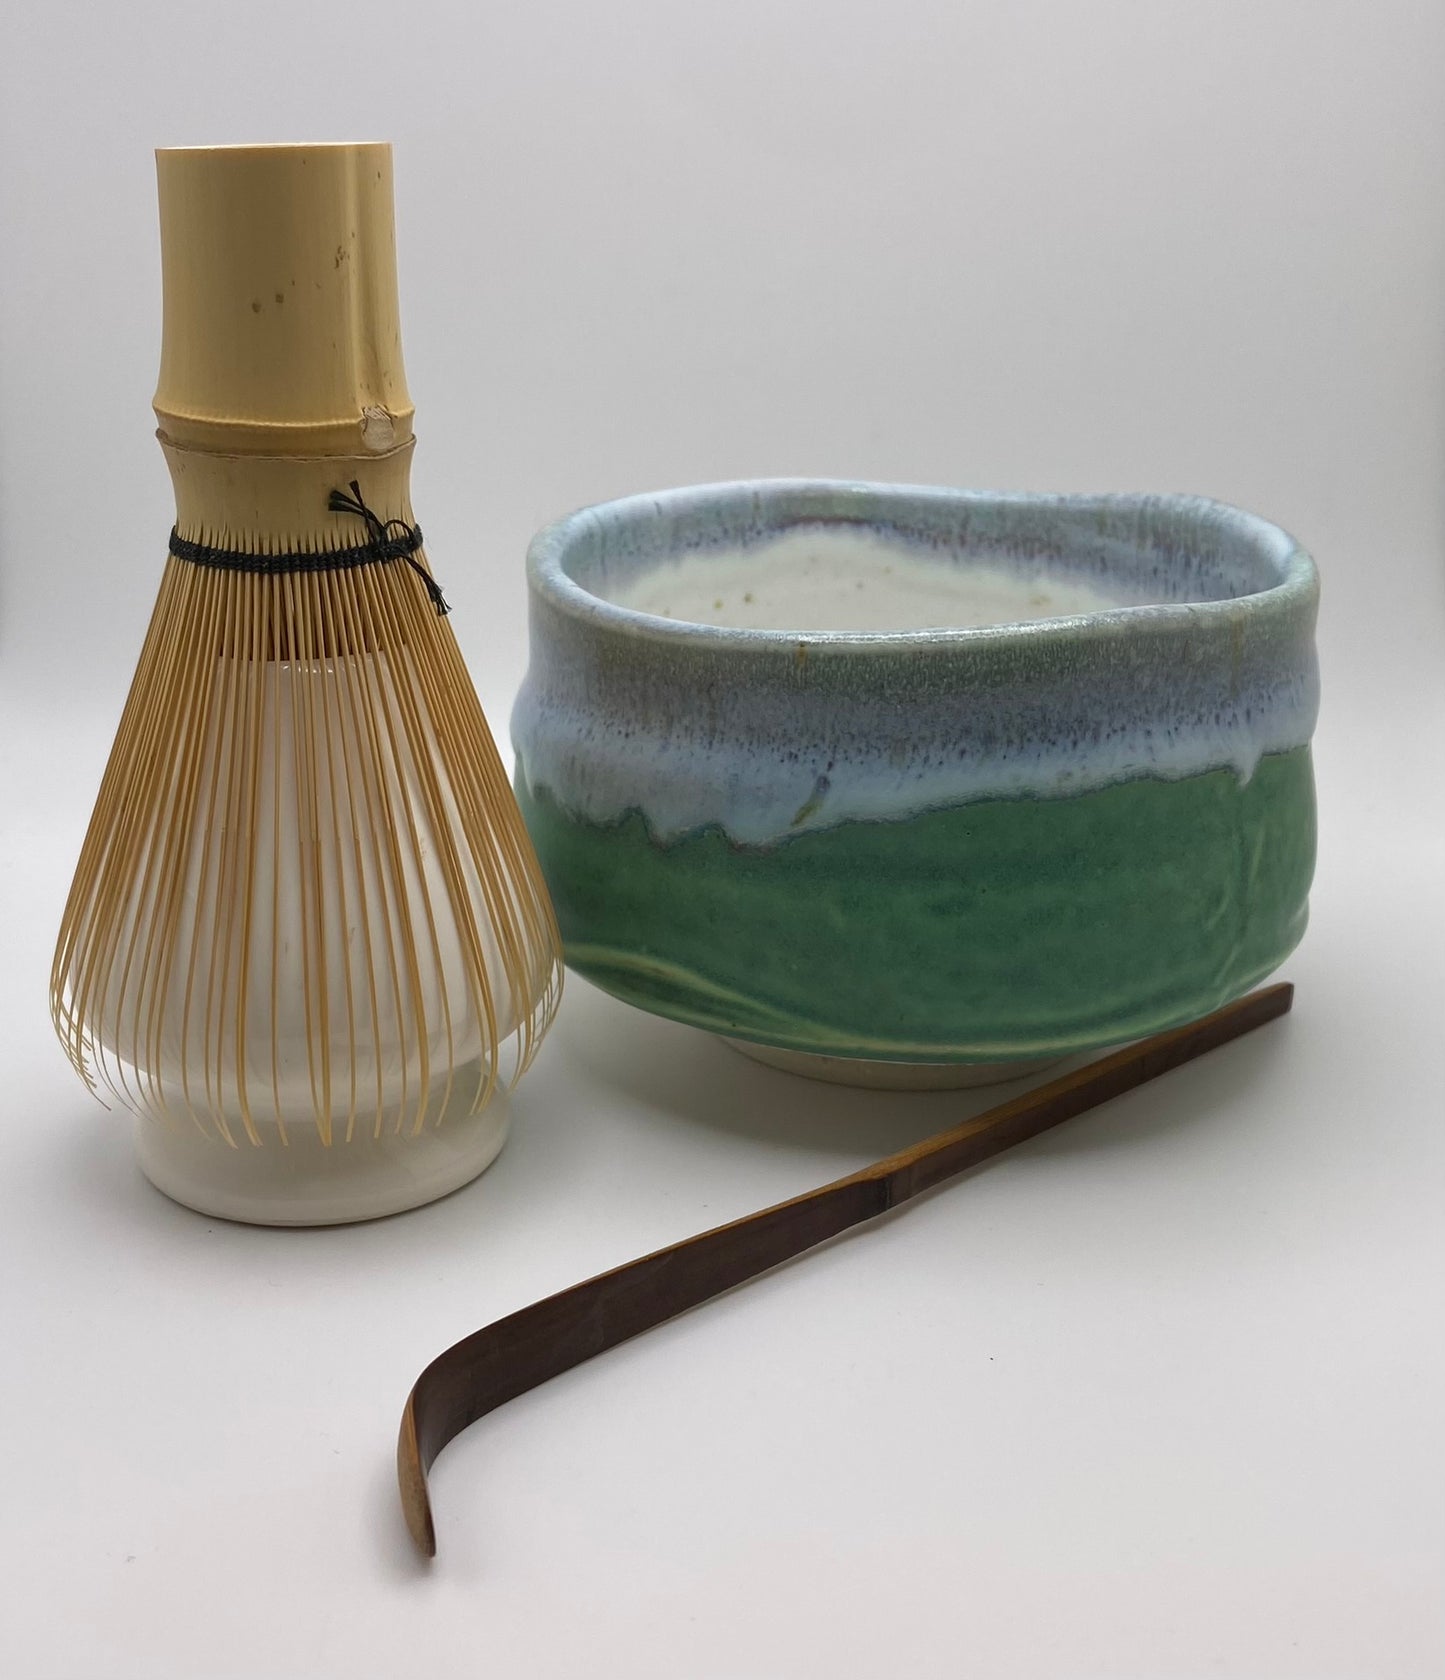 Blue, Green & Aqua Glaze on White Clay Handmade Chawan Matcha Bowl (Large)